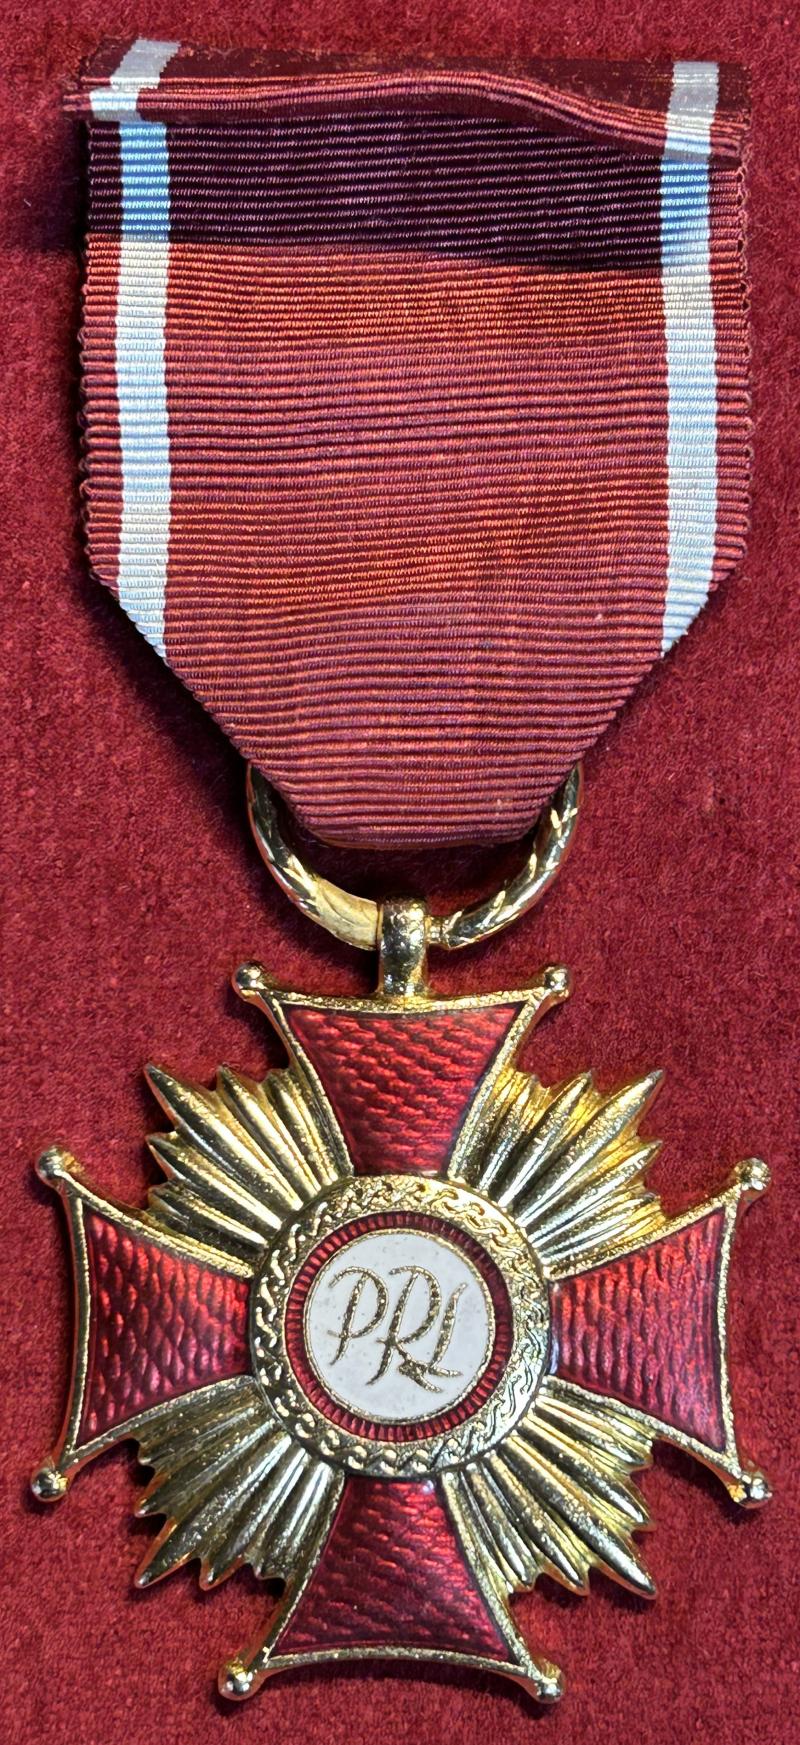 Poland PRL Krzyż Zasługi (Cross of Merit) Gold